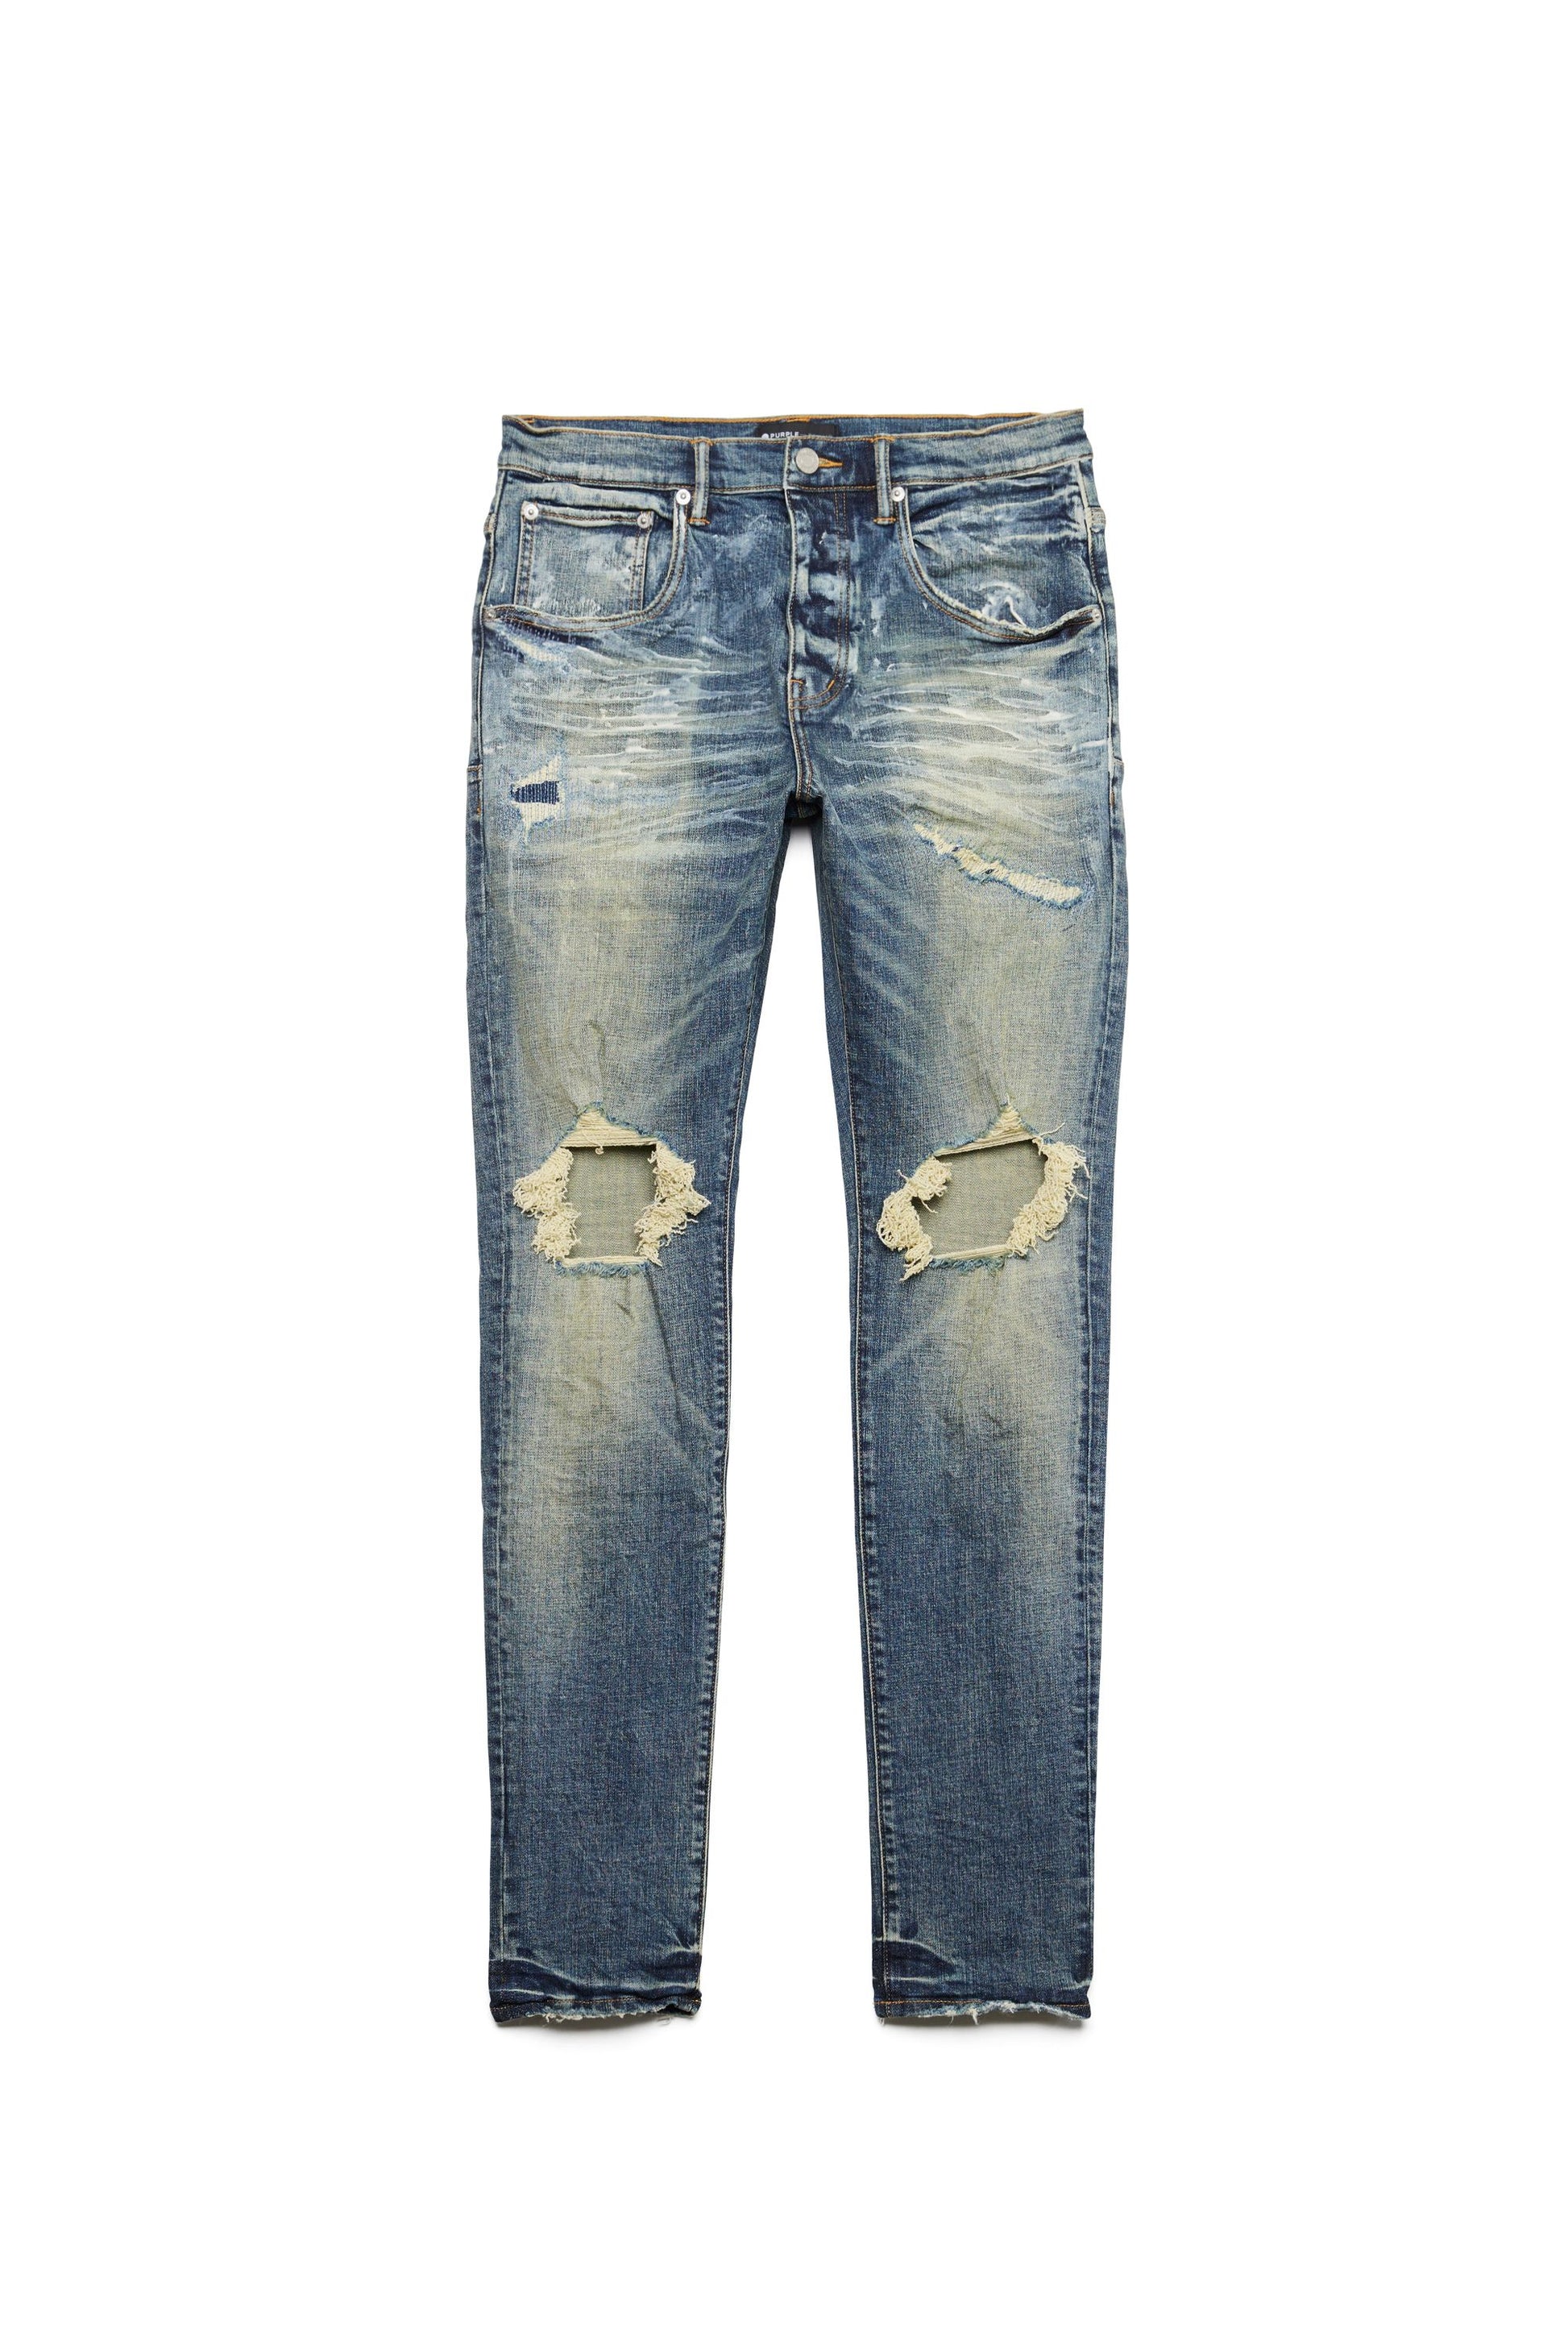 PURPLE BRAND - Men's Denim Jean - Mid Rise Slim - Style No. P002 - Indigo Hard Wax Blowout - Front